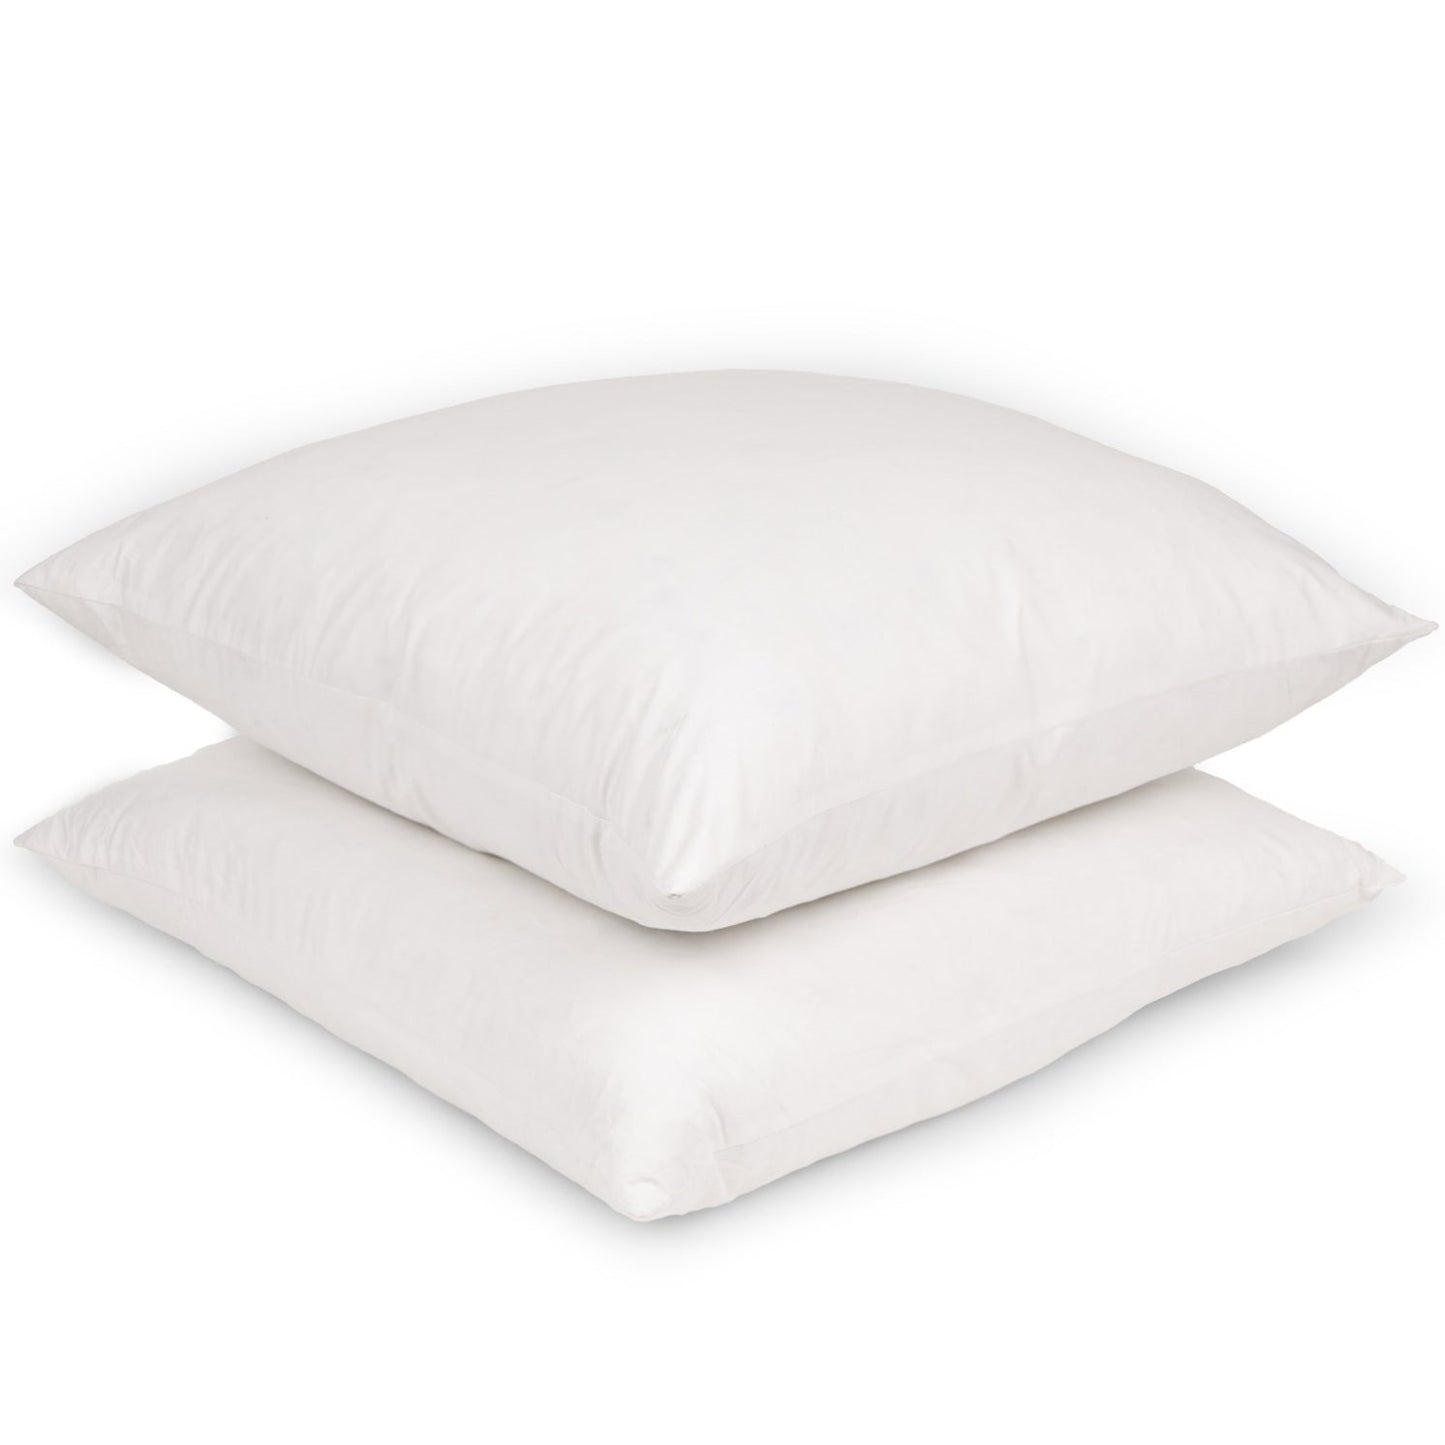 26x26 White Goose Down European Pillow Inserts by Maison Des Garçon 100% Cotton, Soft Goose Down & Feather, Luxurious and Decorative Throw Pillow Sham, Set of 2